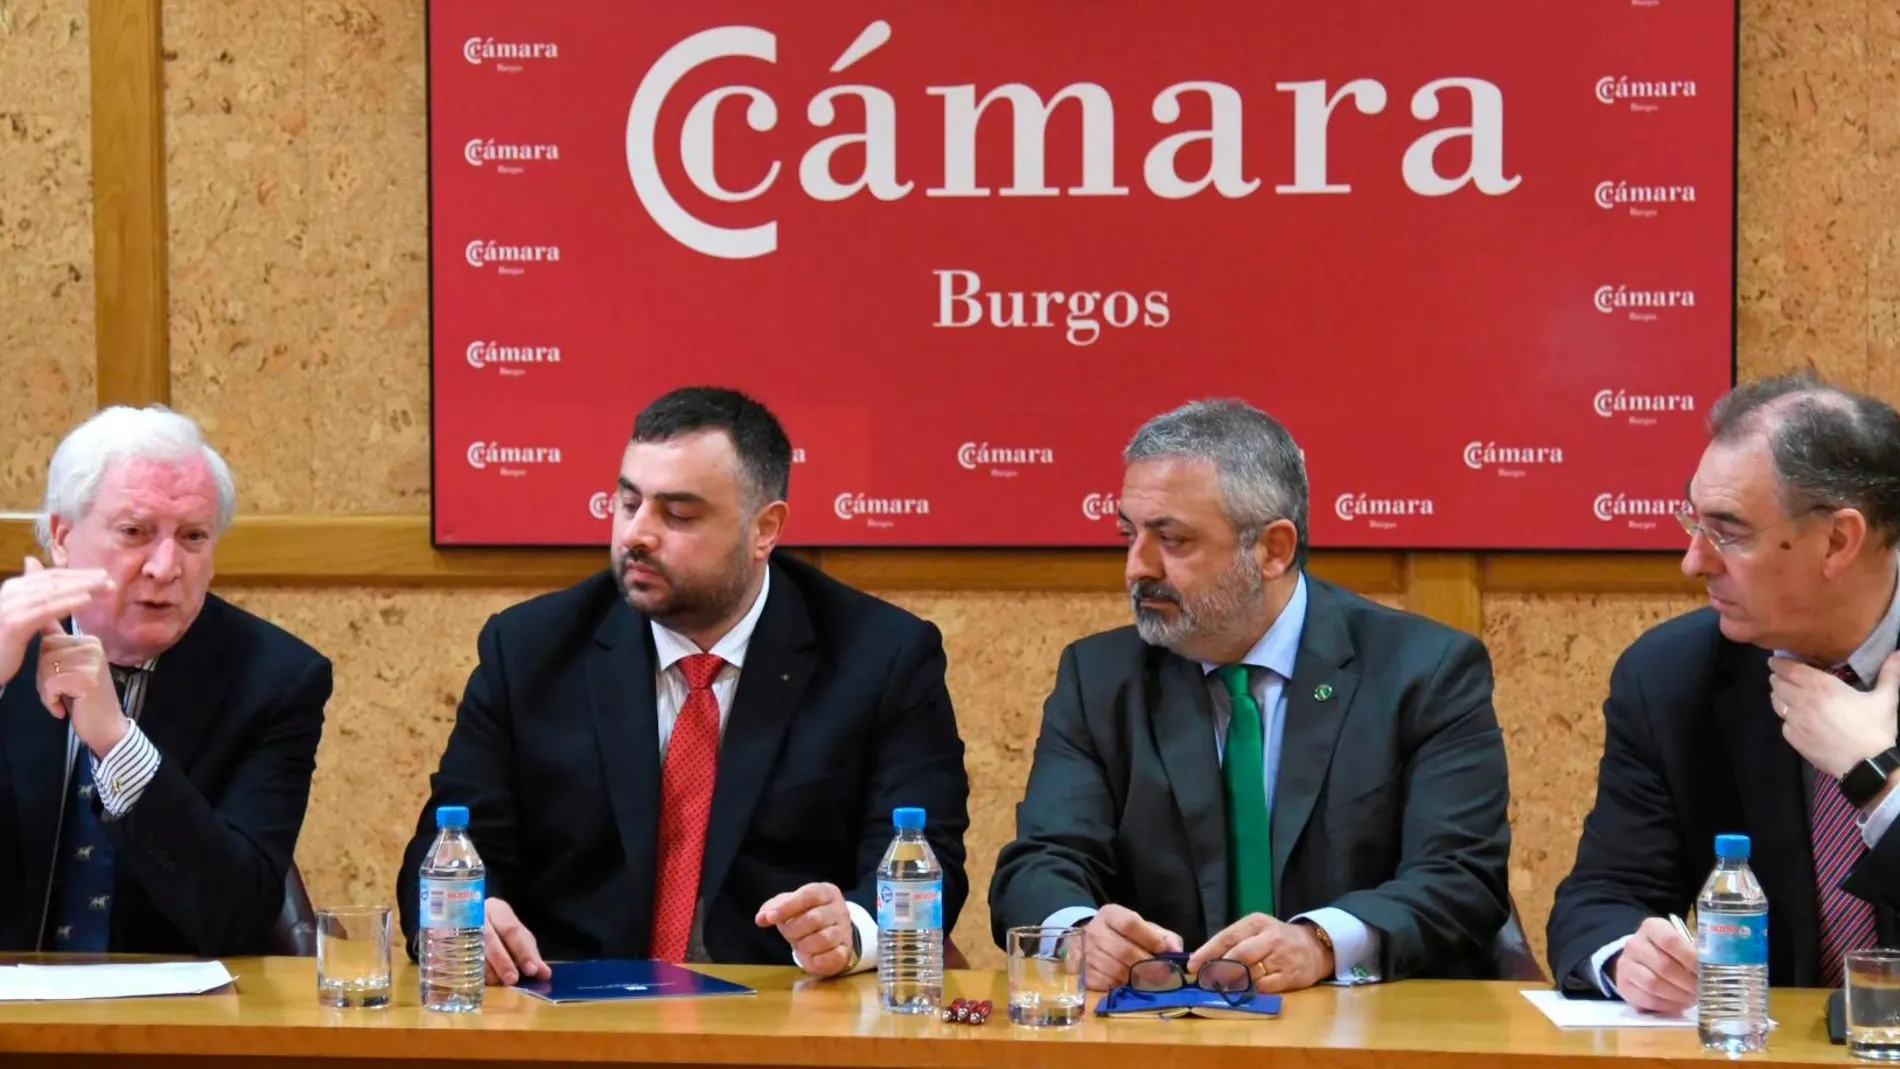 El presidente de la Cámara de Burgos, Antonio Méndez Pozo, inaugura la jornada